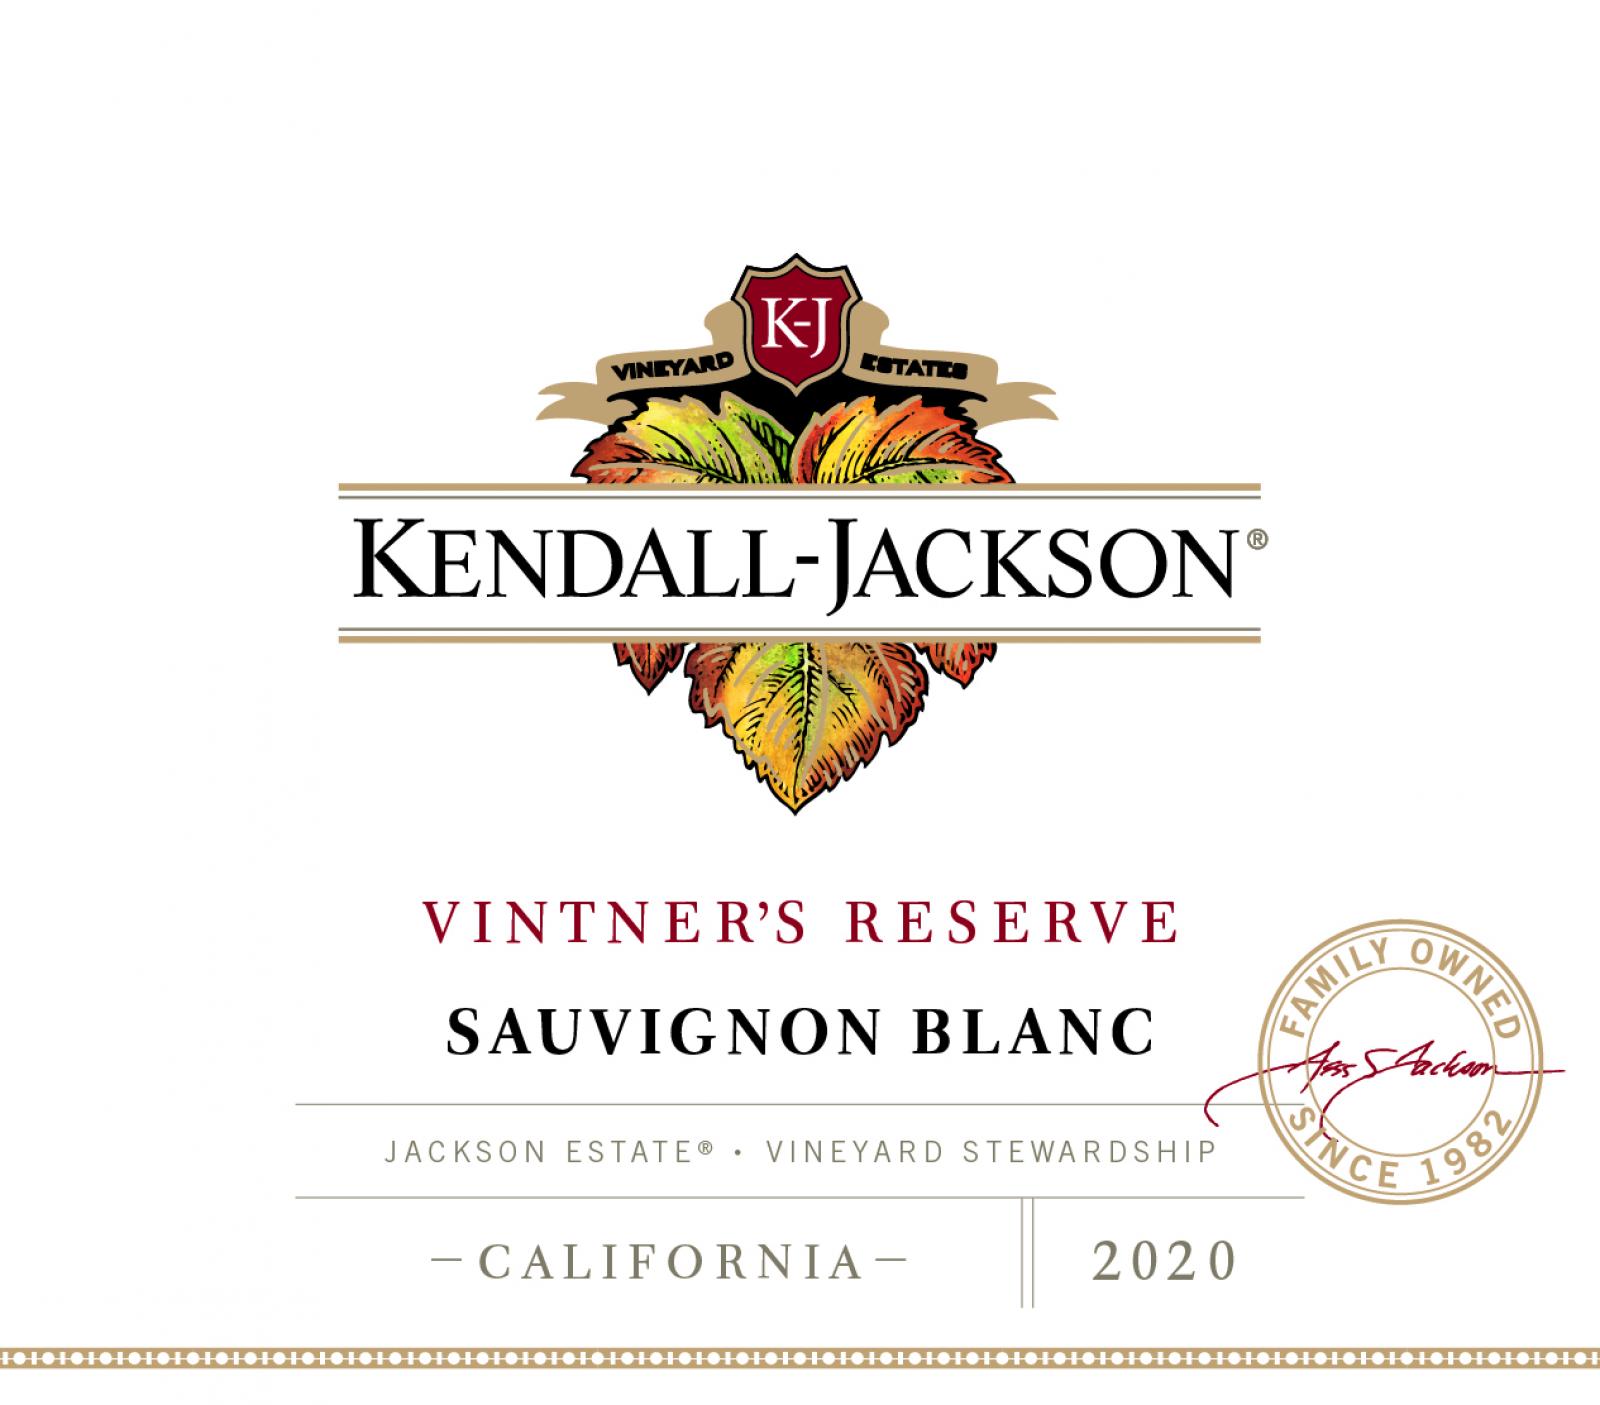 Kendall Jackson Vintner's Reserve Sauvignon Blanc 2020